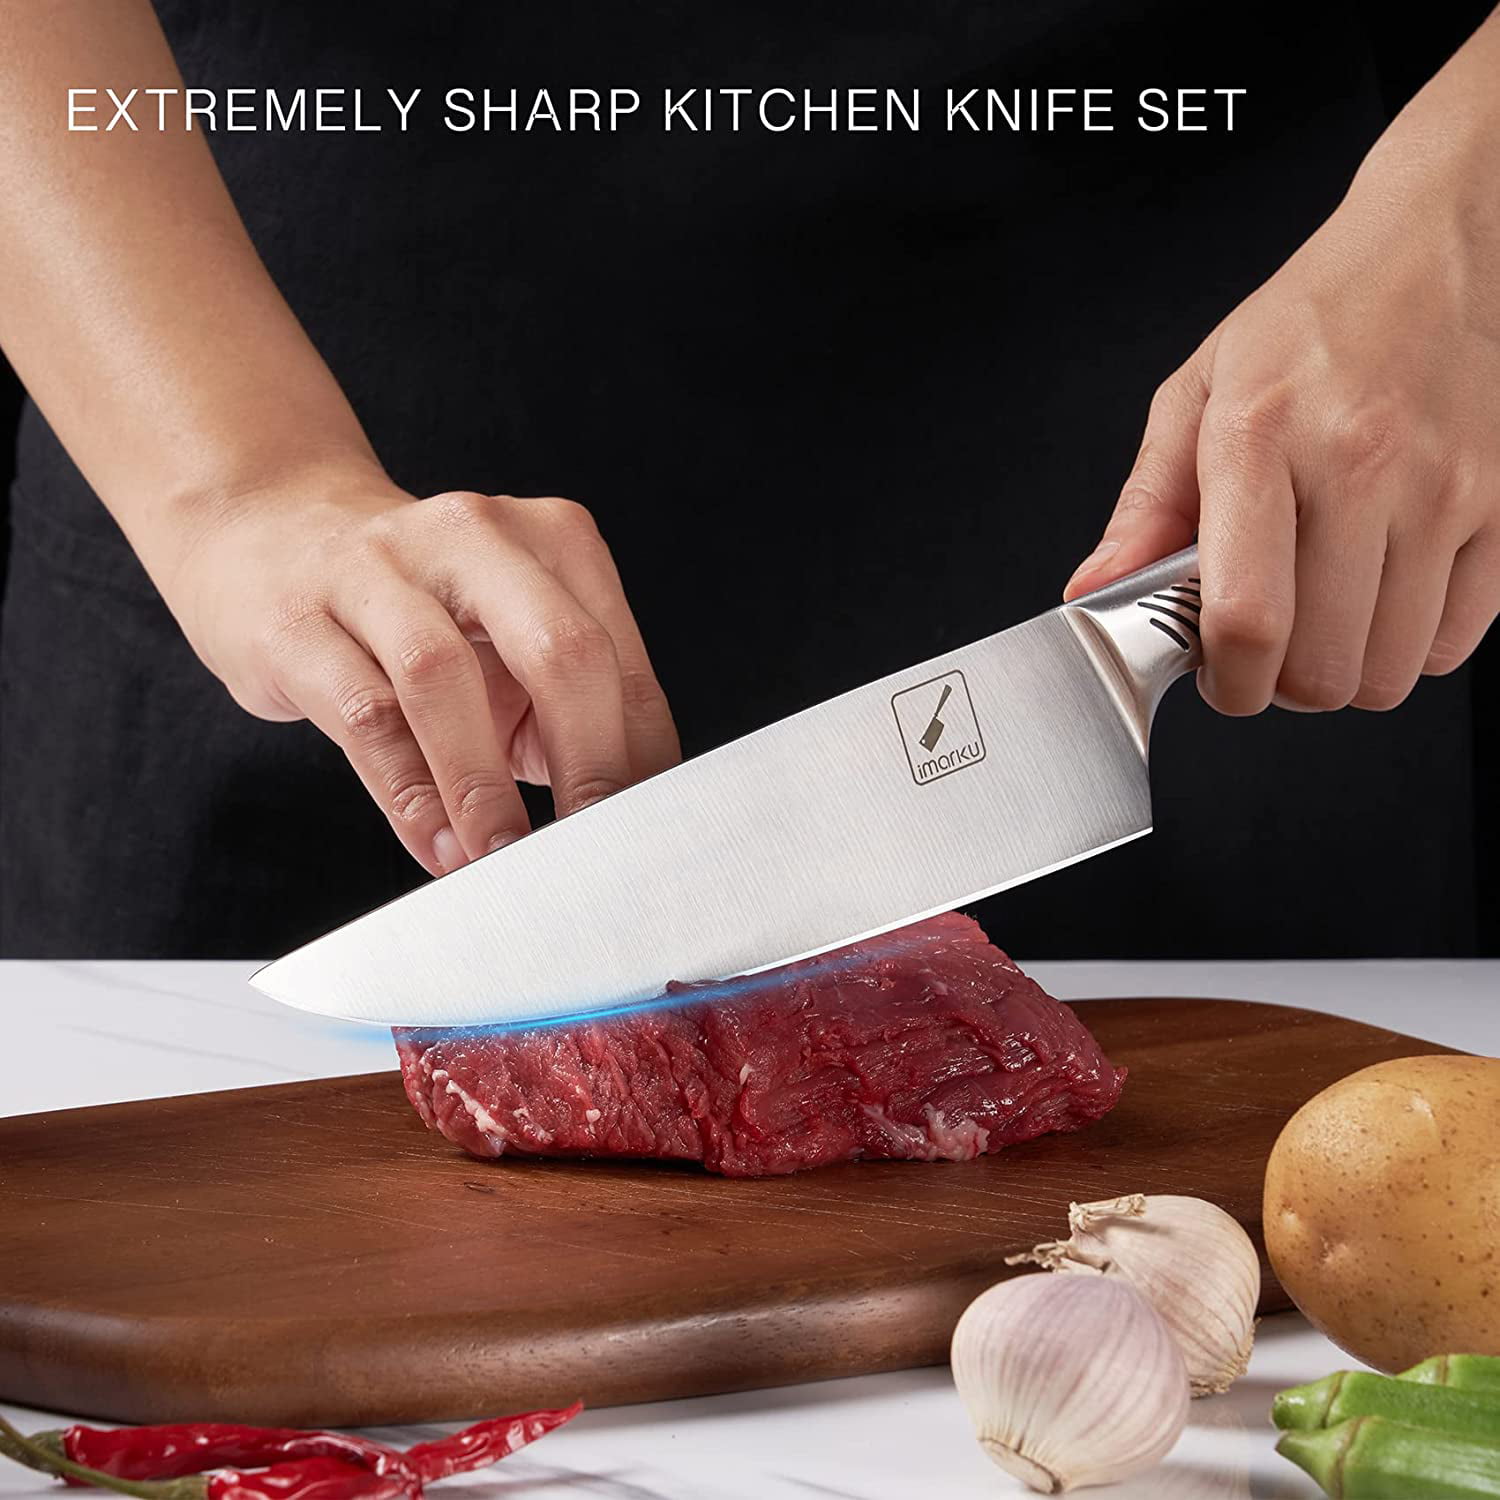 Set - imarku Kitchen Knife Set 15 Piece Japanese Stainless Steel